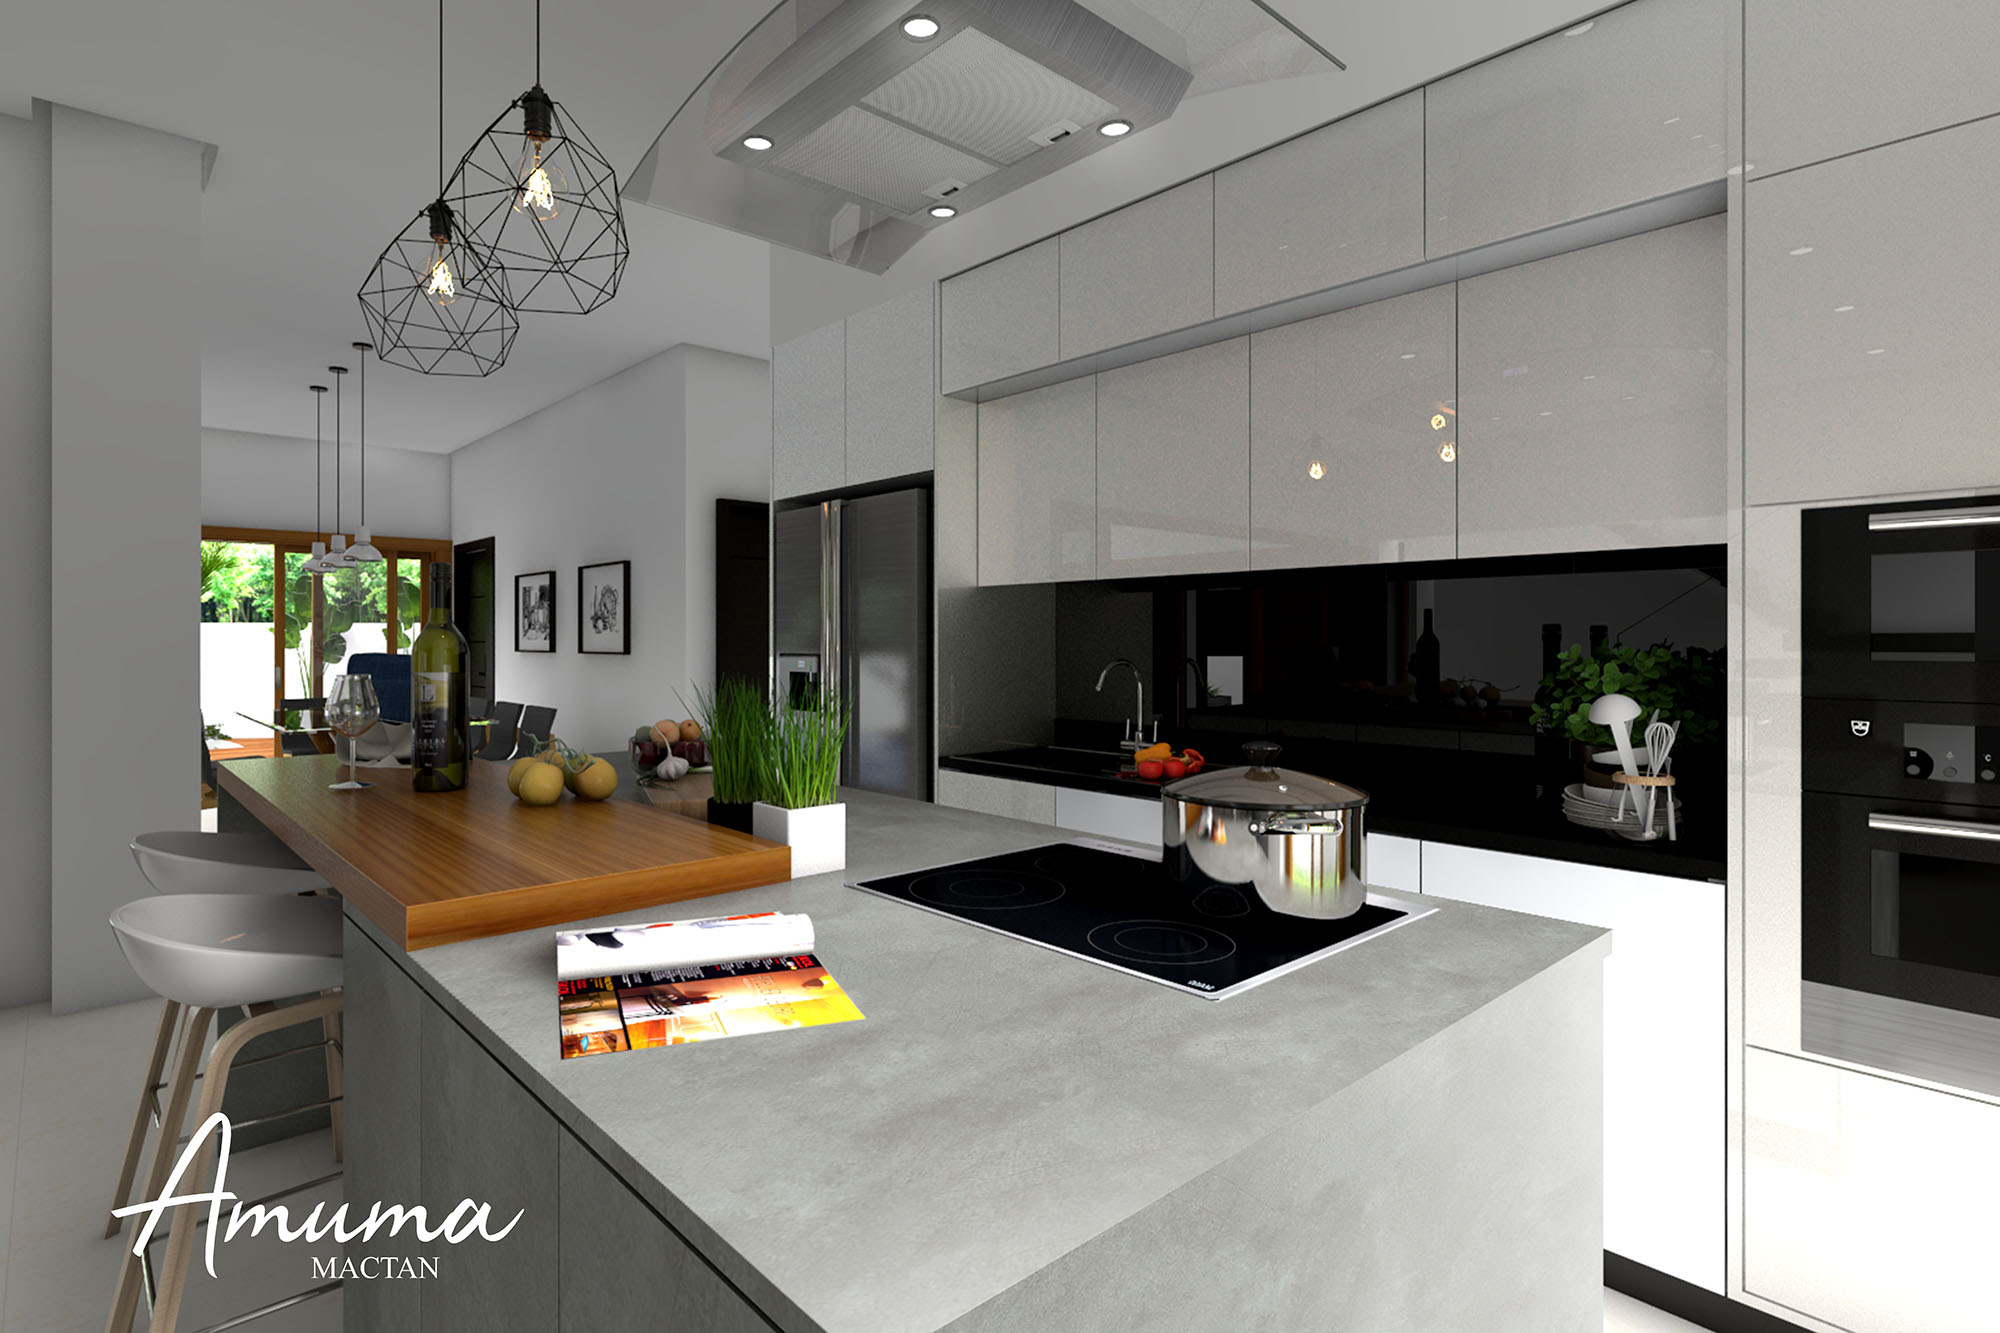 Amuma Mactan – Total Luxury Property inside Vistamar Beach Club in Mactan